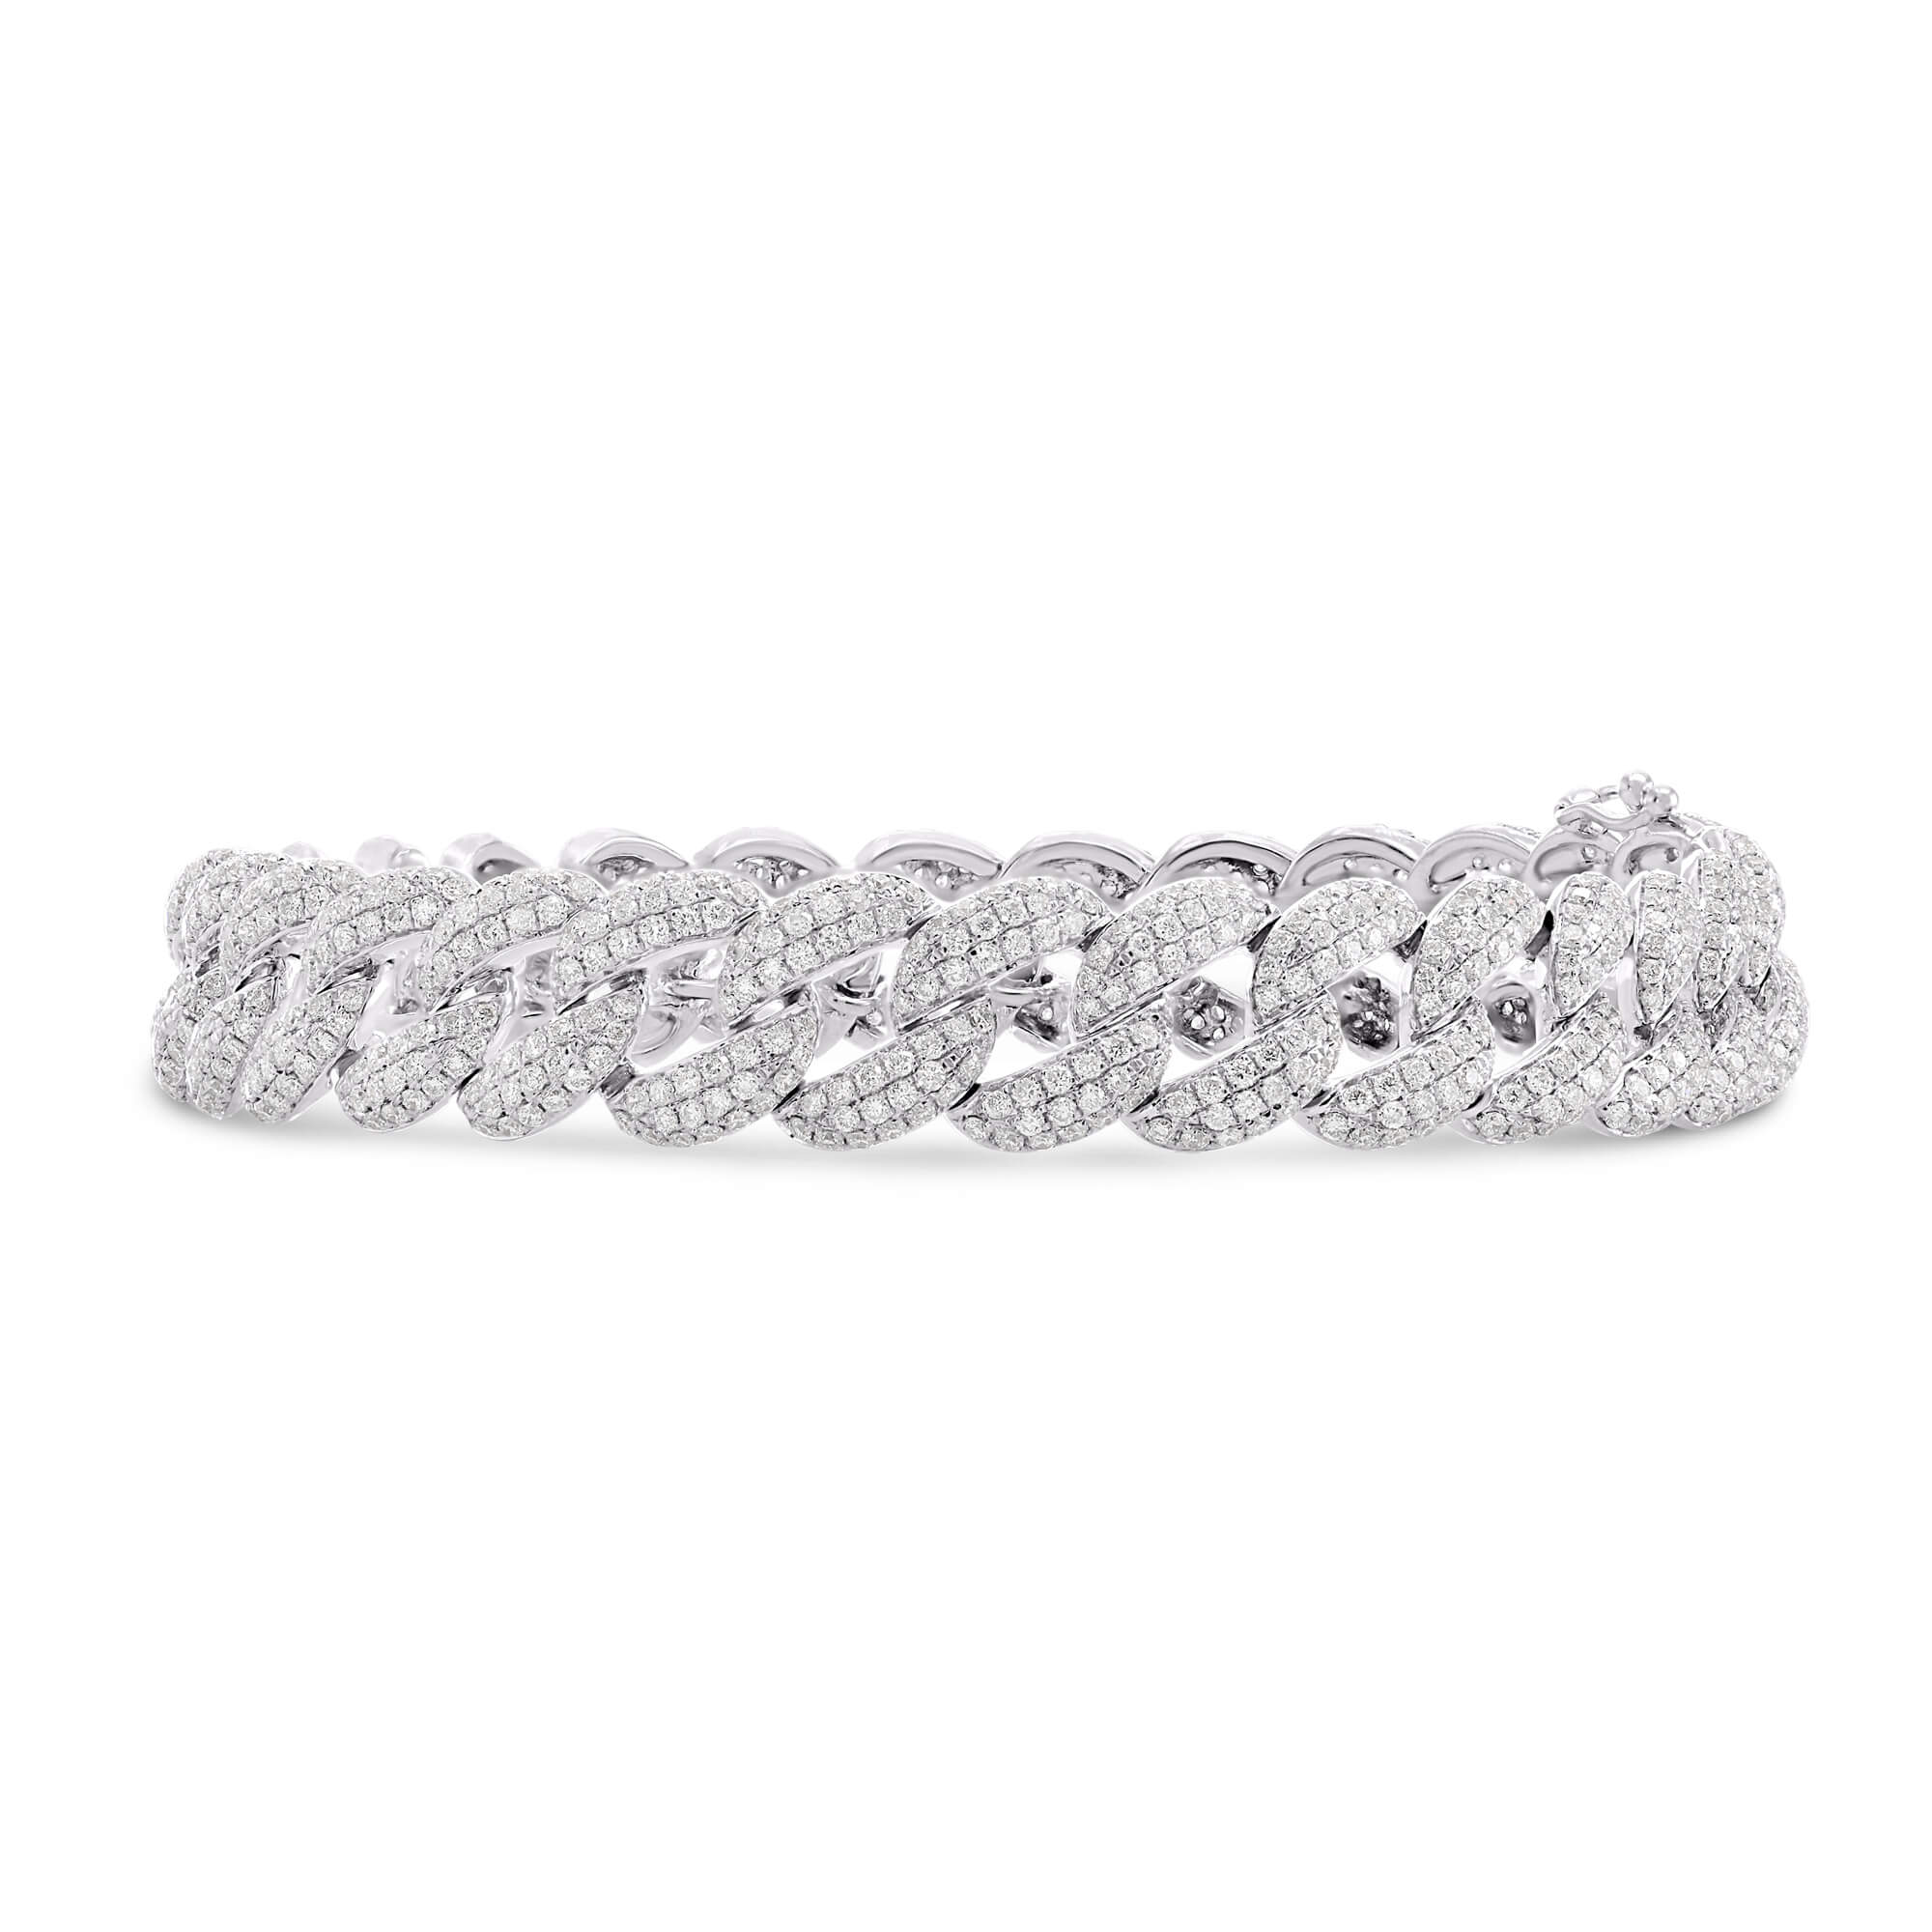 Update more than 81 daisy diamond bracelet latest - in.duhocakina